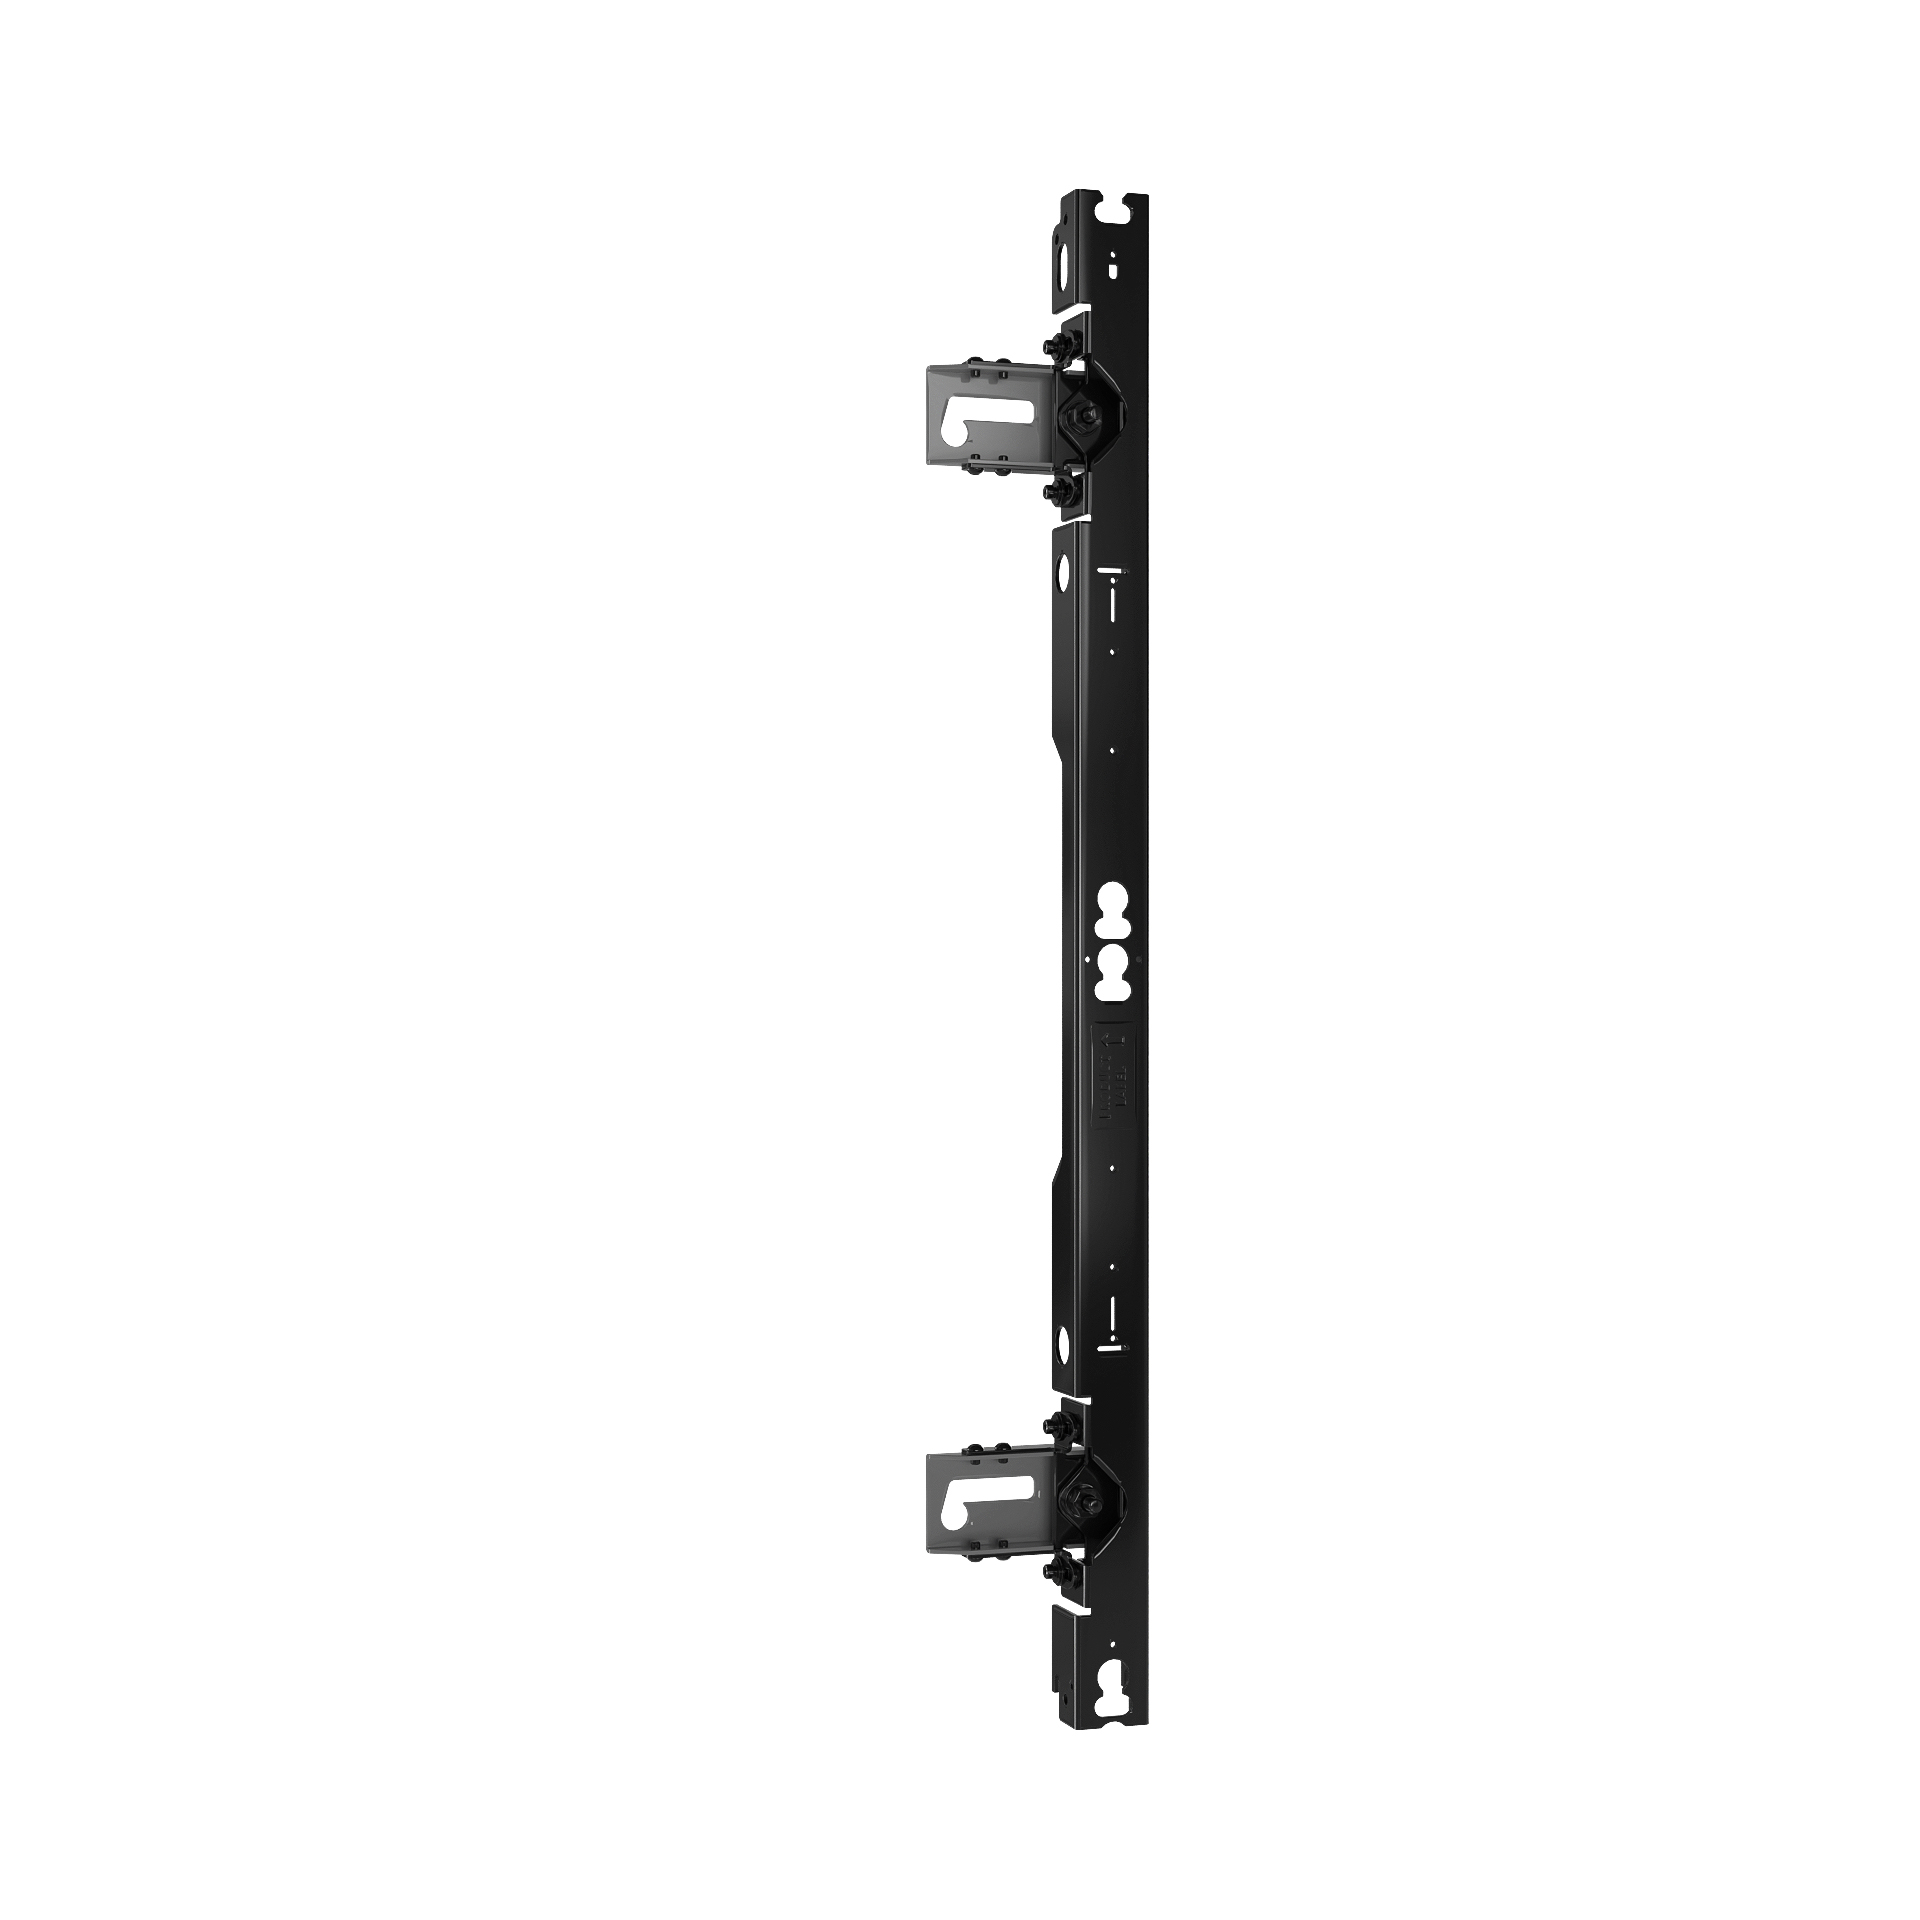 TILD1X3LG2-R Right dvLED Wall Mount for LG LSCB Series Ultra Slim, 3 Displays Tall